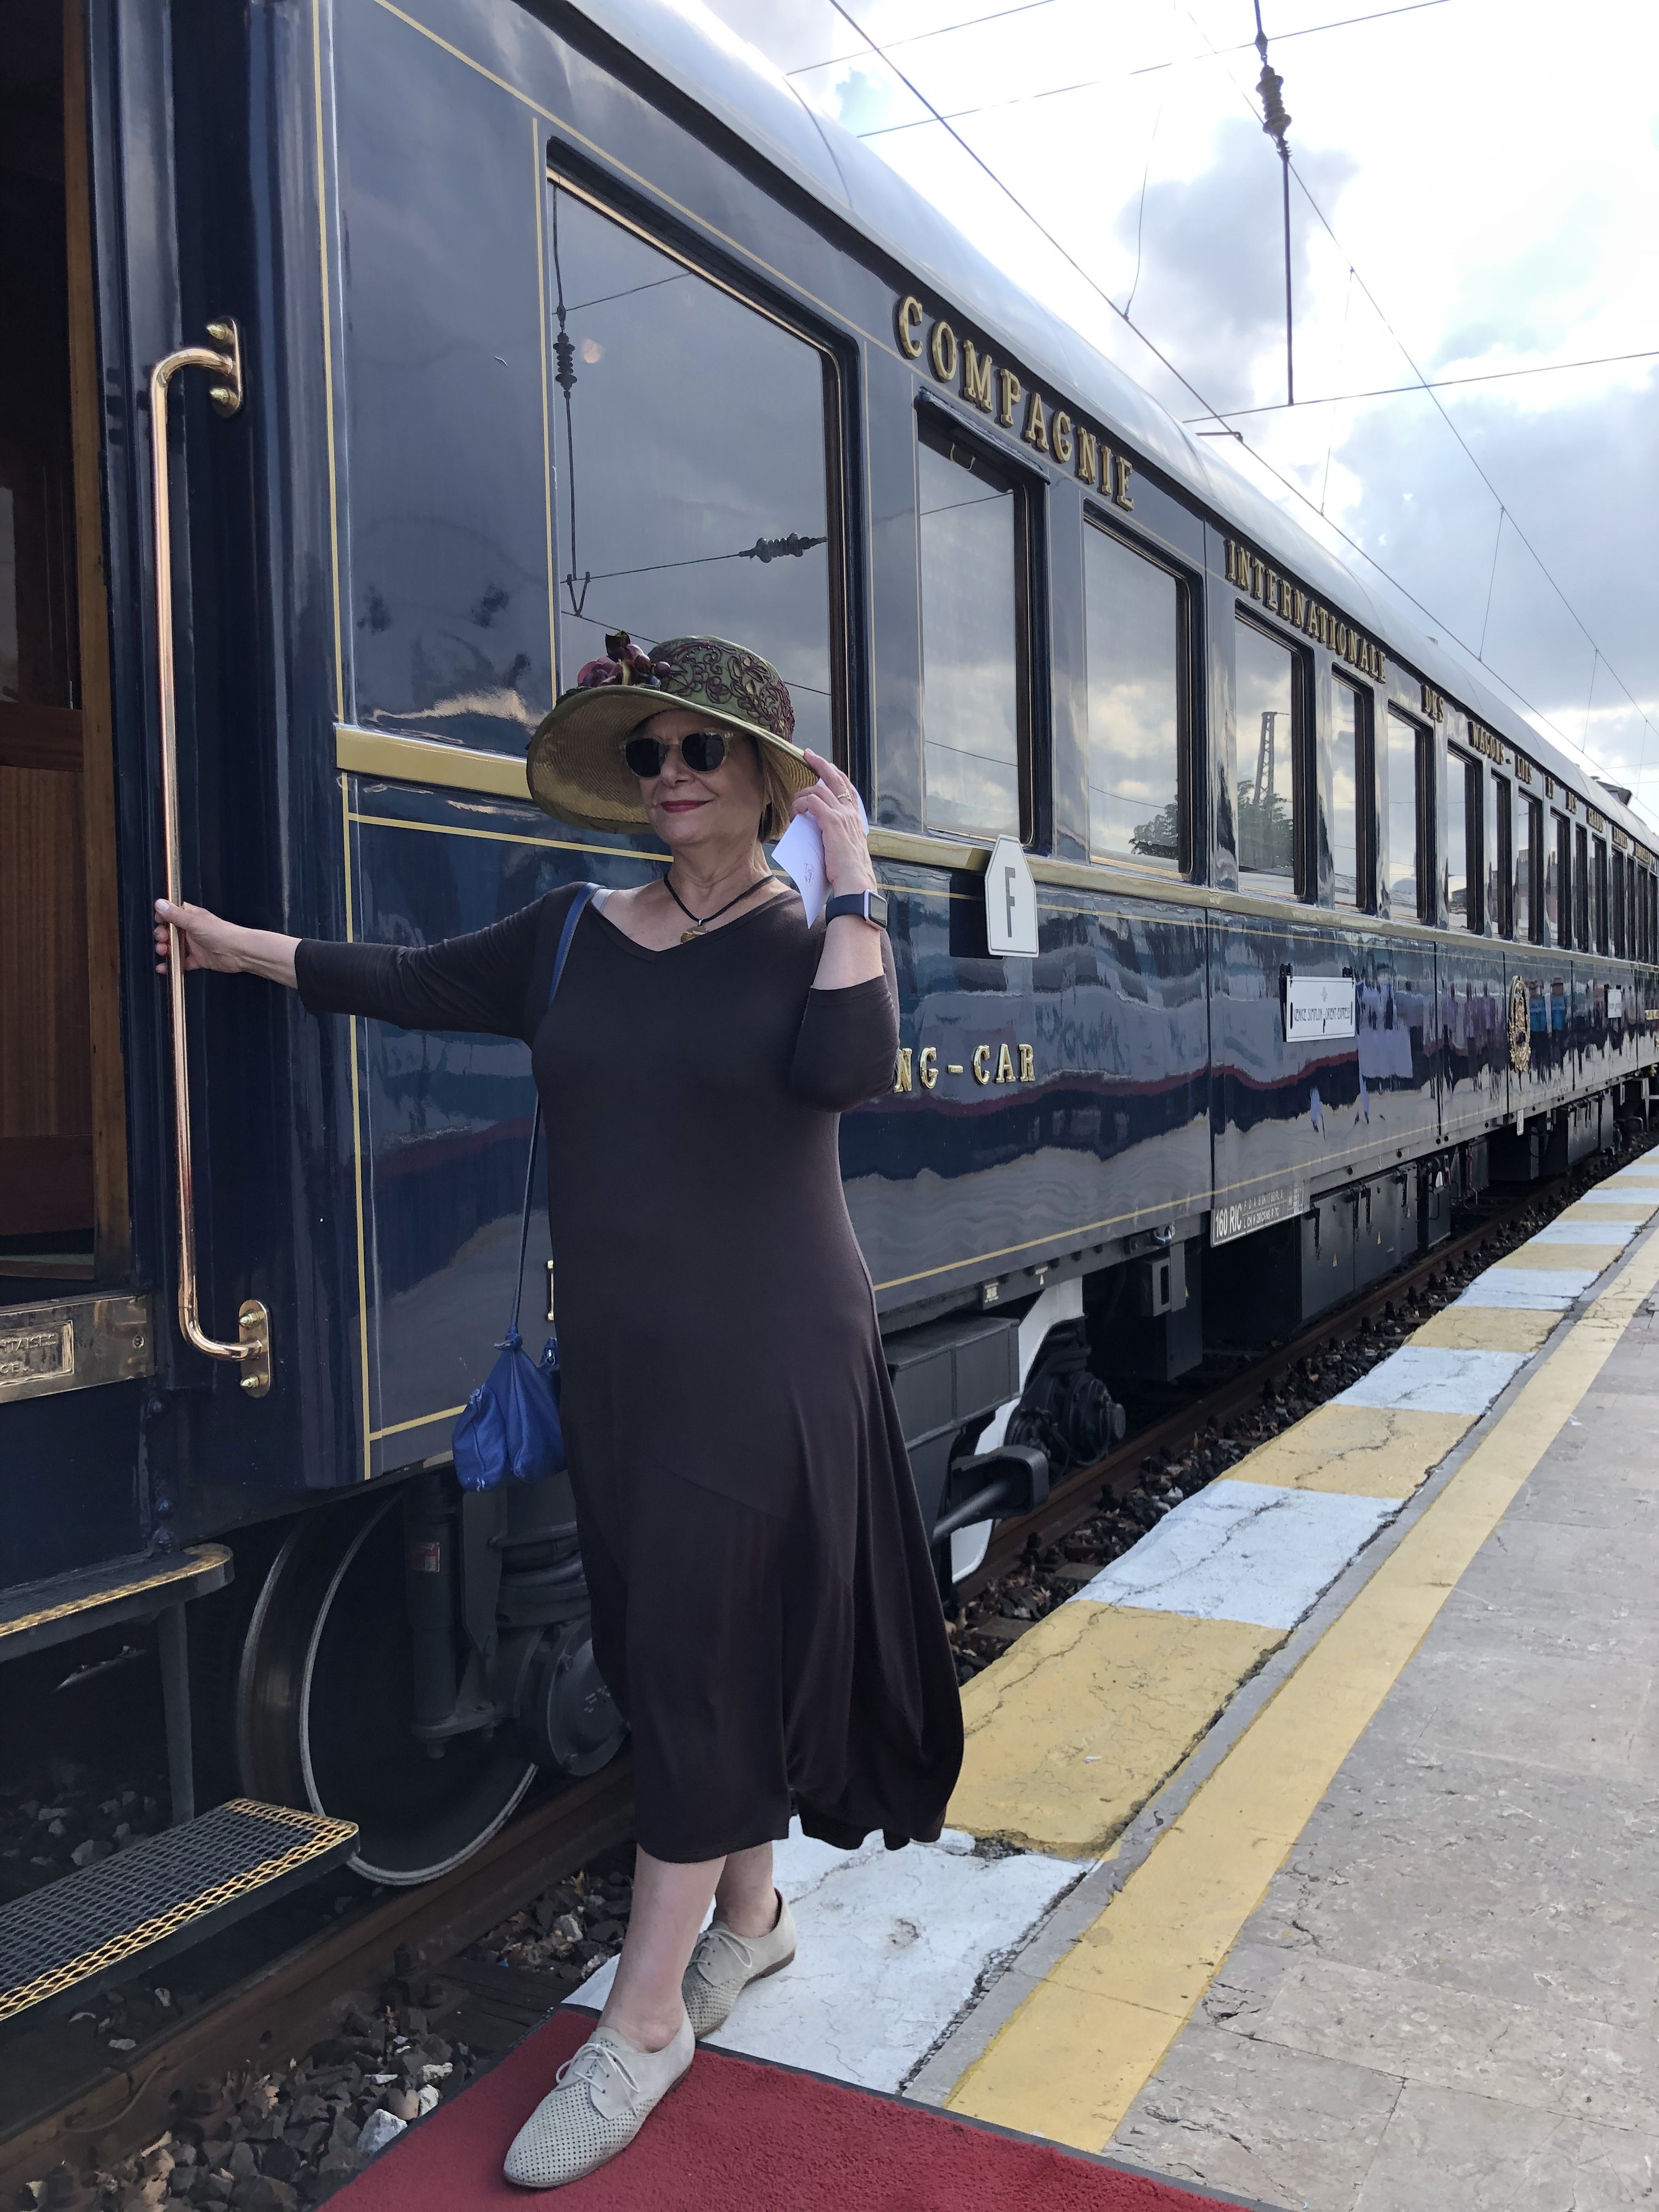 Orient Express: The Journey Begins